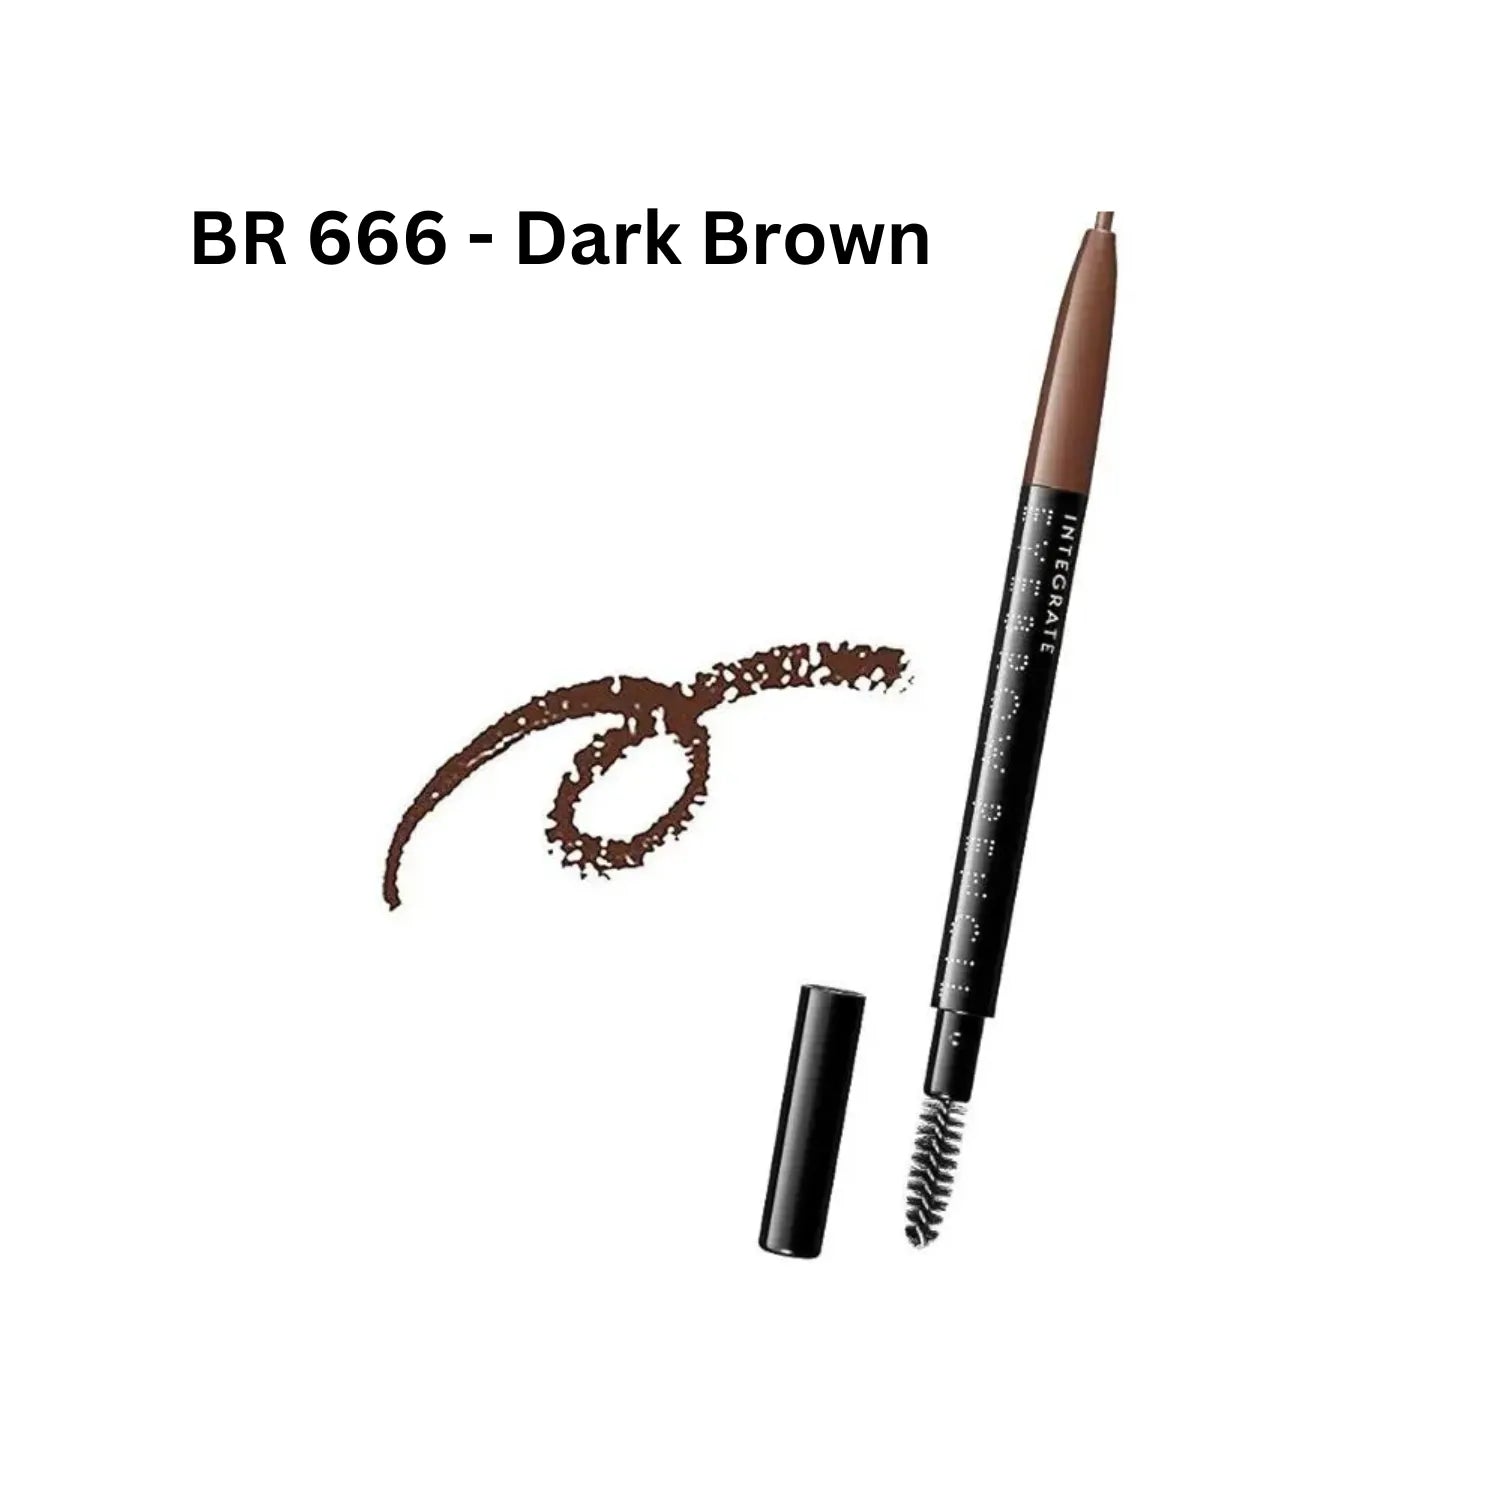 BR 666 - Dark Brown